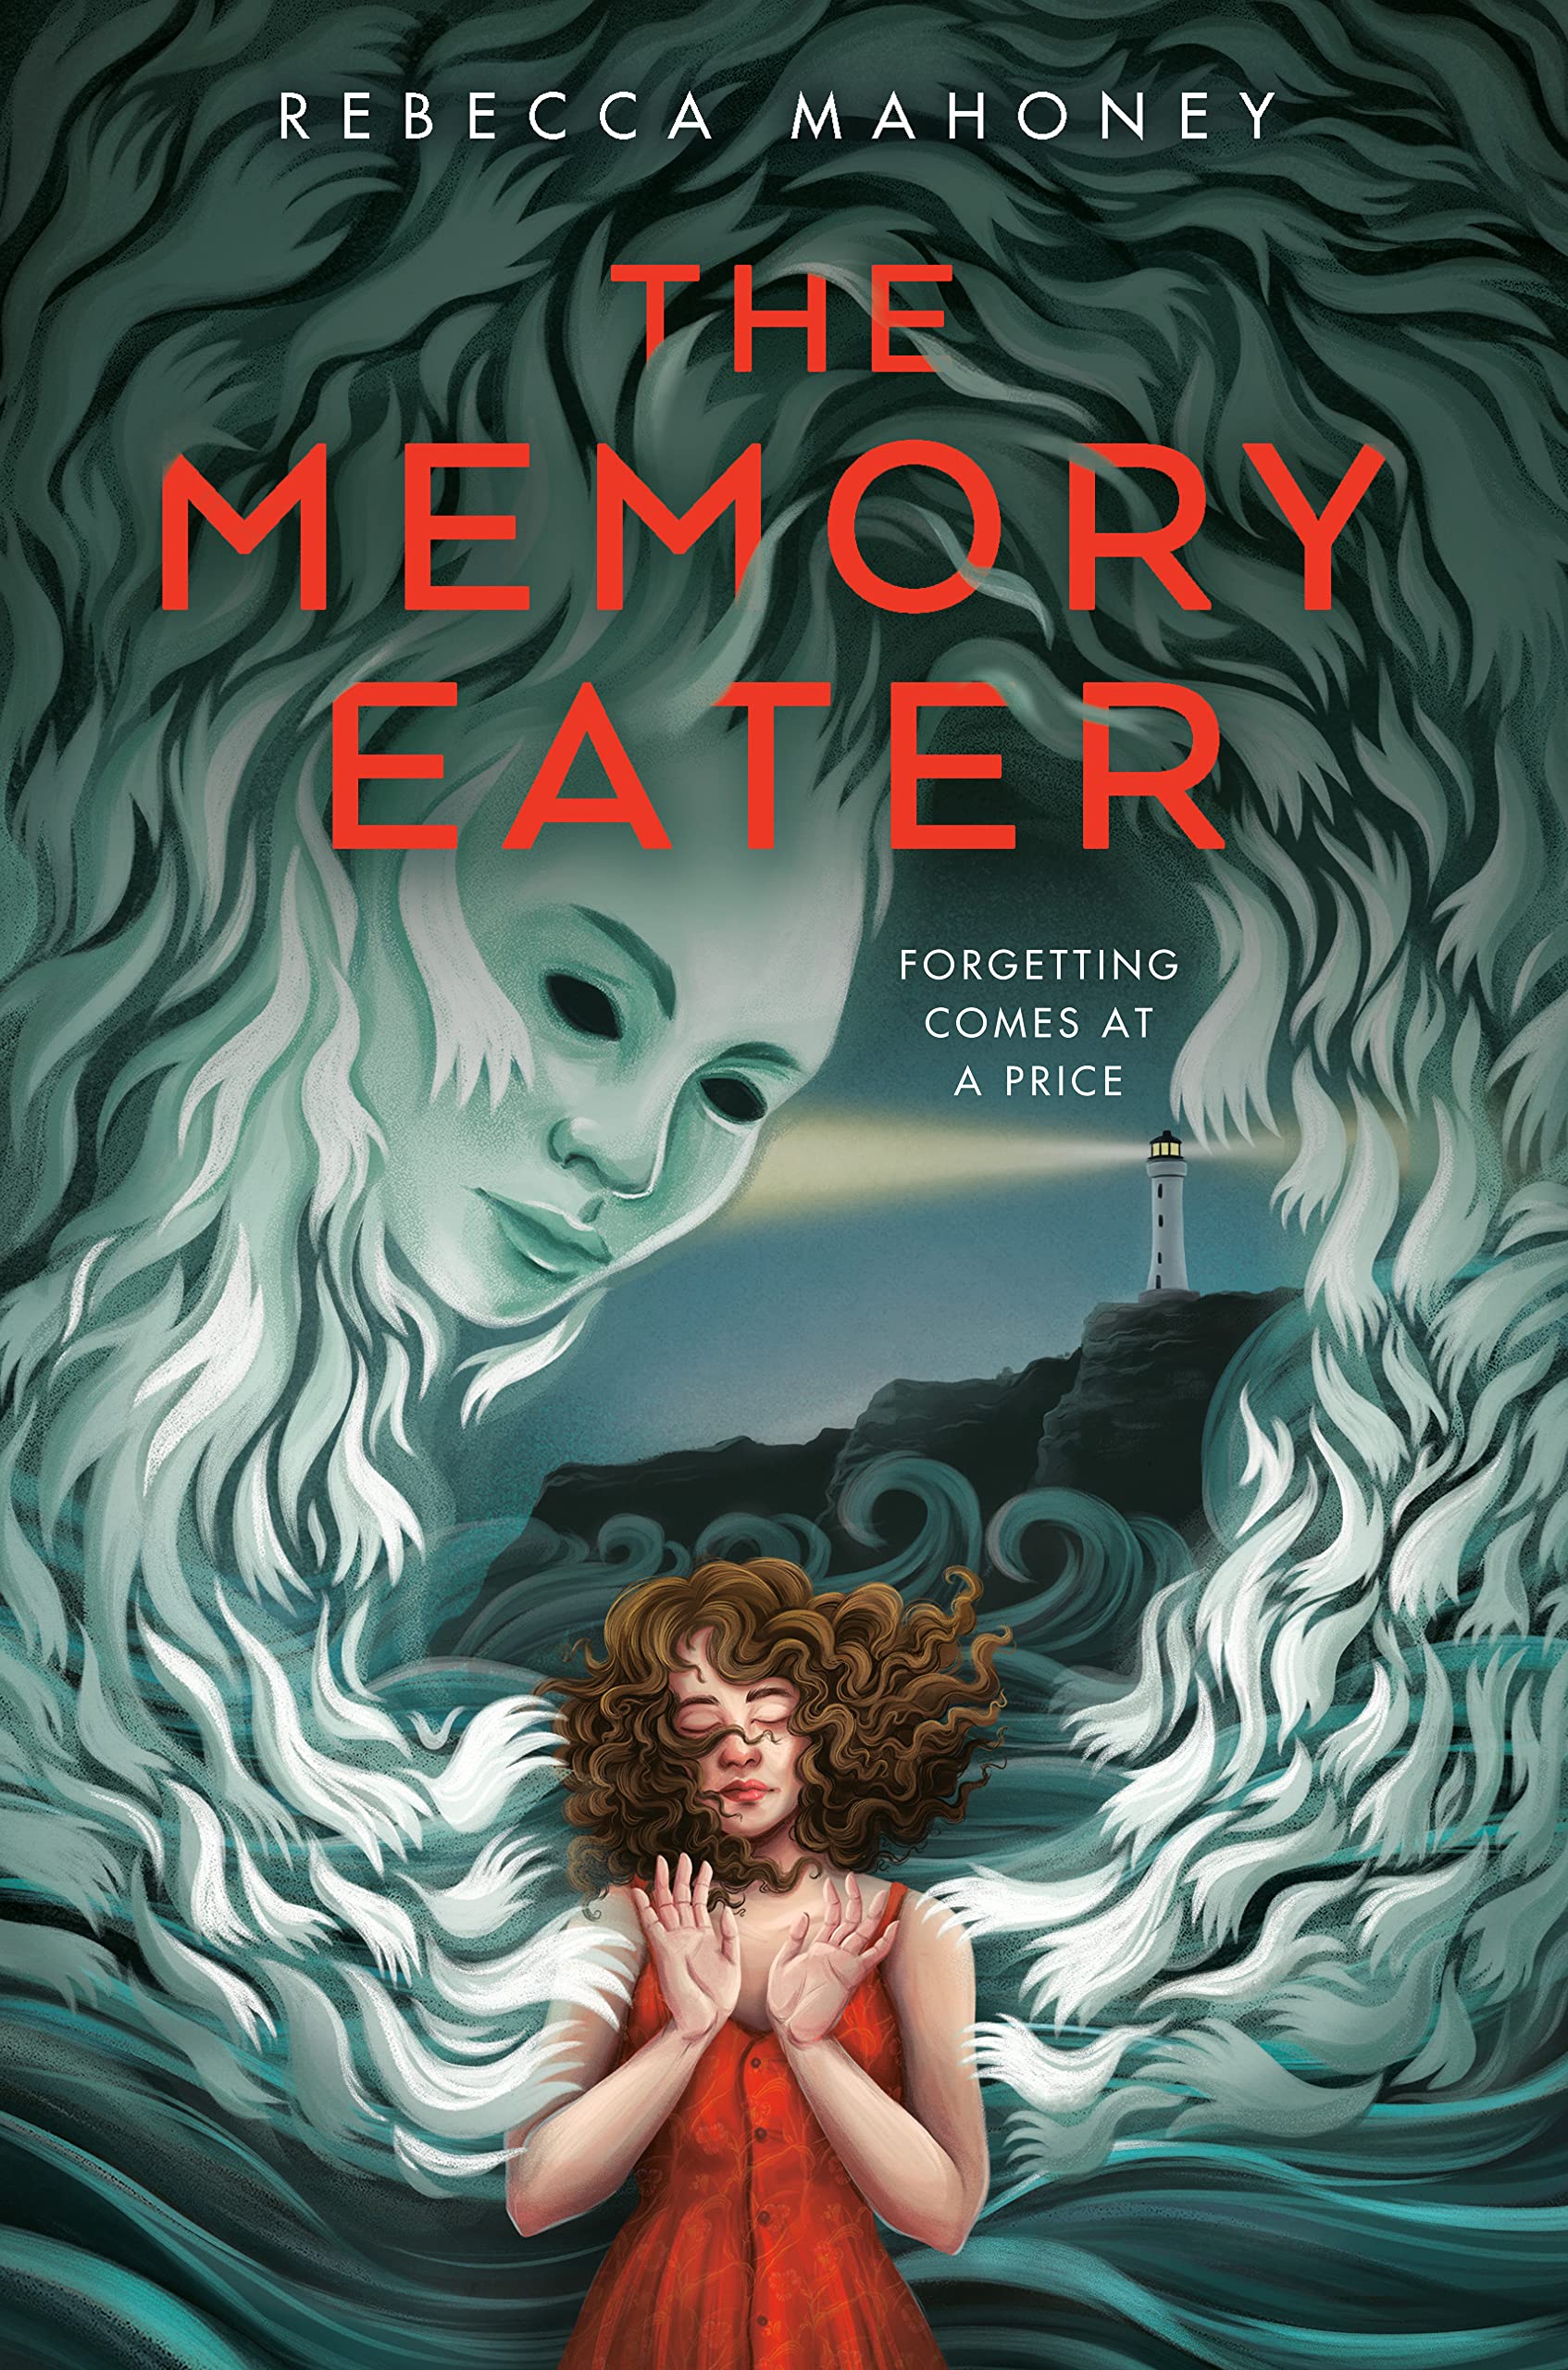 Teen Book Club - "The Memory Eater"